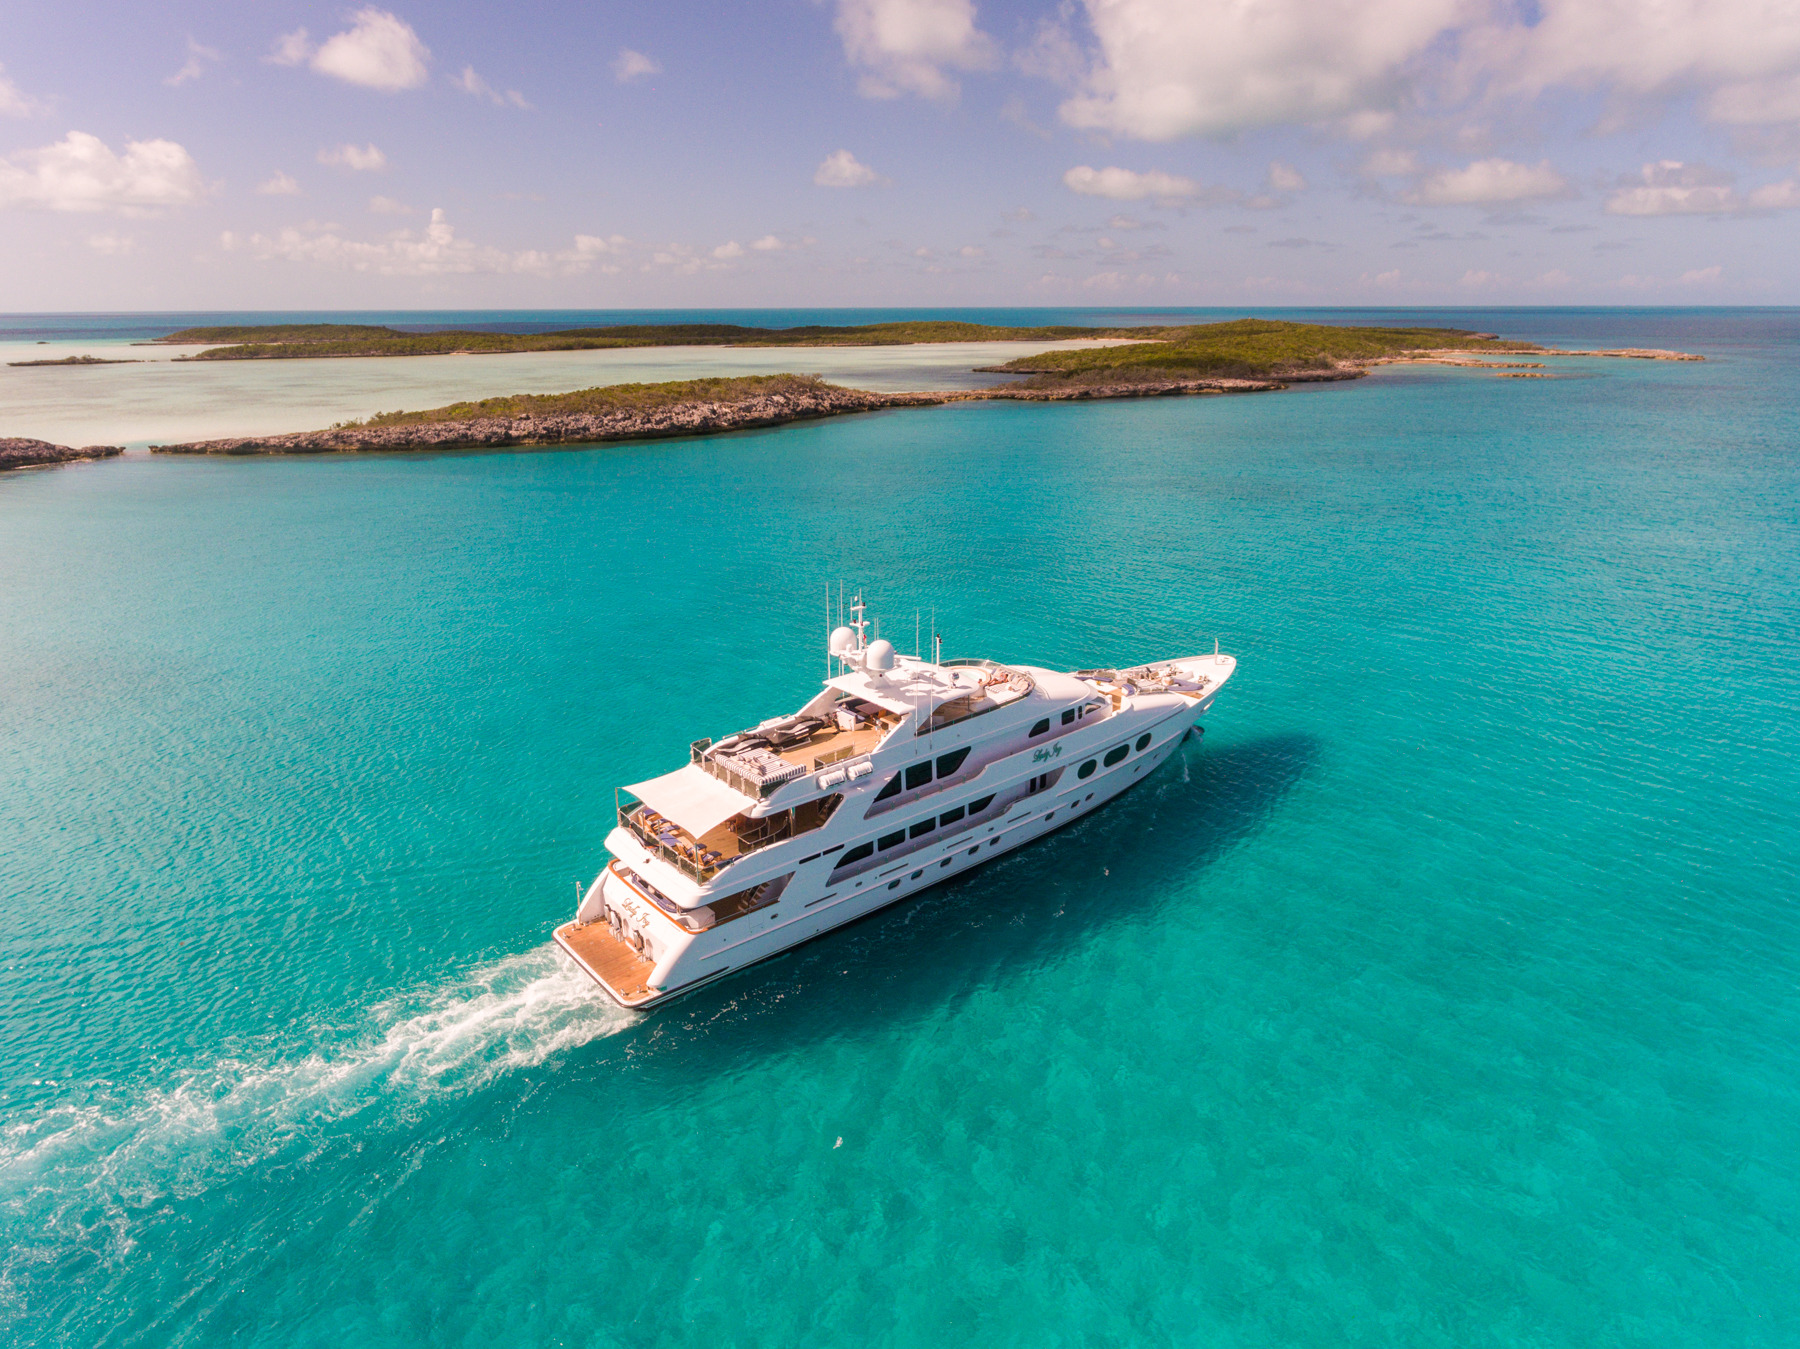 Motor Yacht LADY JOY By Christensen - Cruising The Bahamas